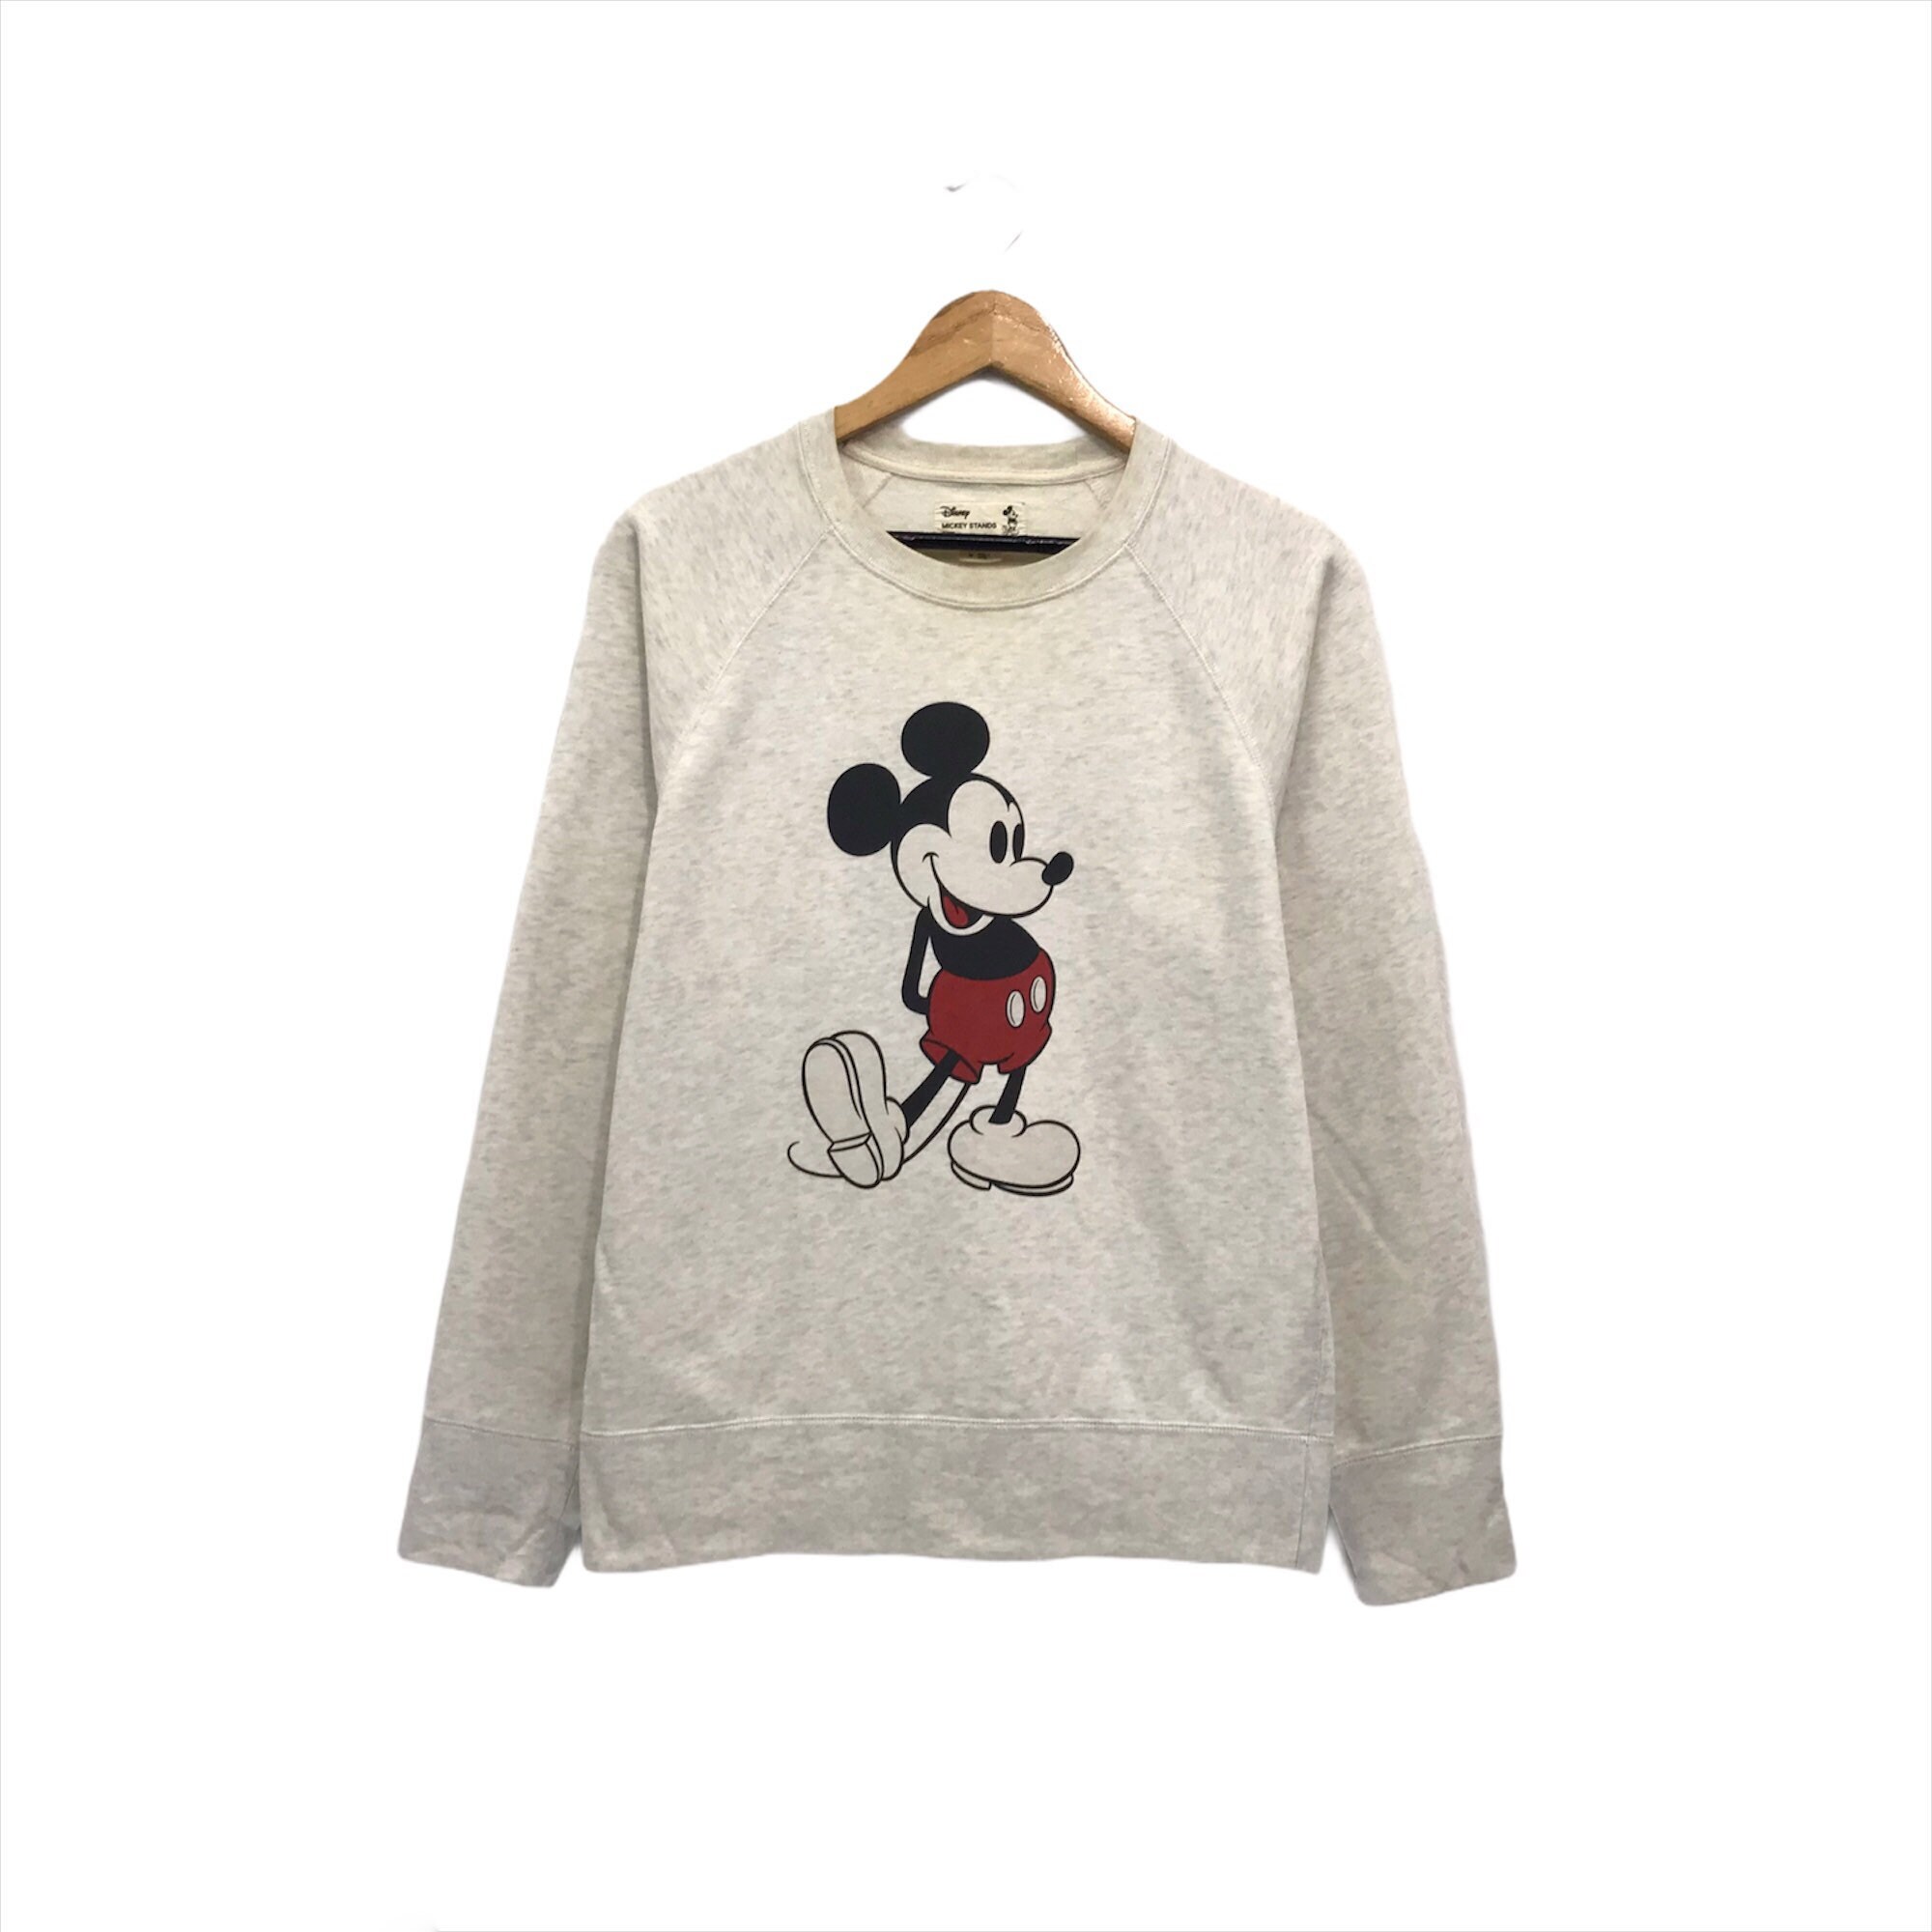 Vintage Mickey Mouse Hawaii sweatshirt jumper crewneck very big logo size large extremelyrare!!! Pick!